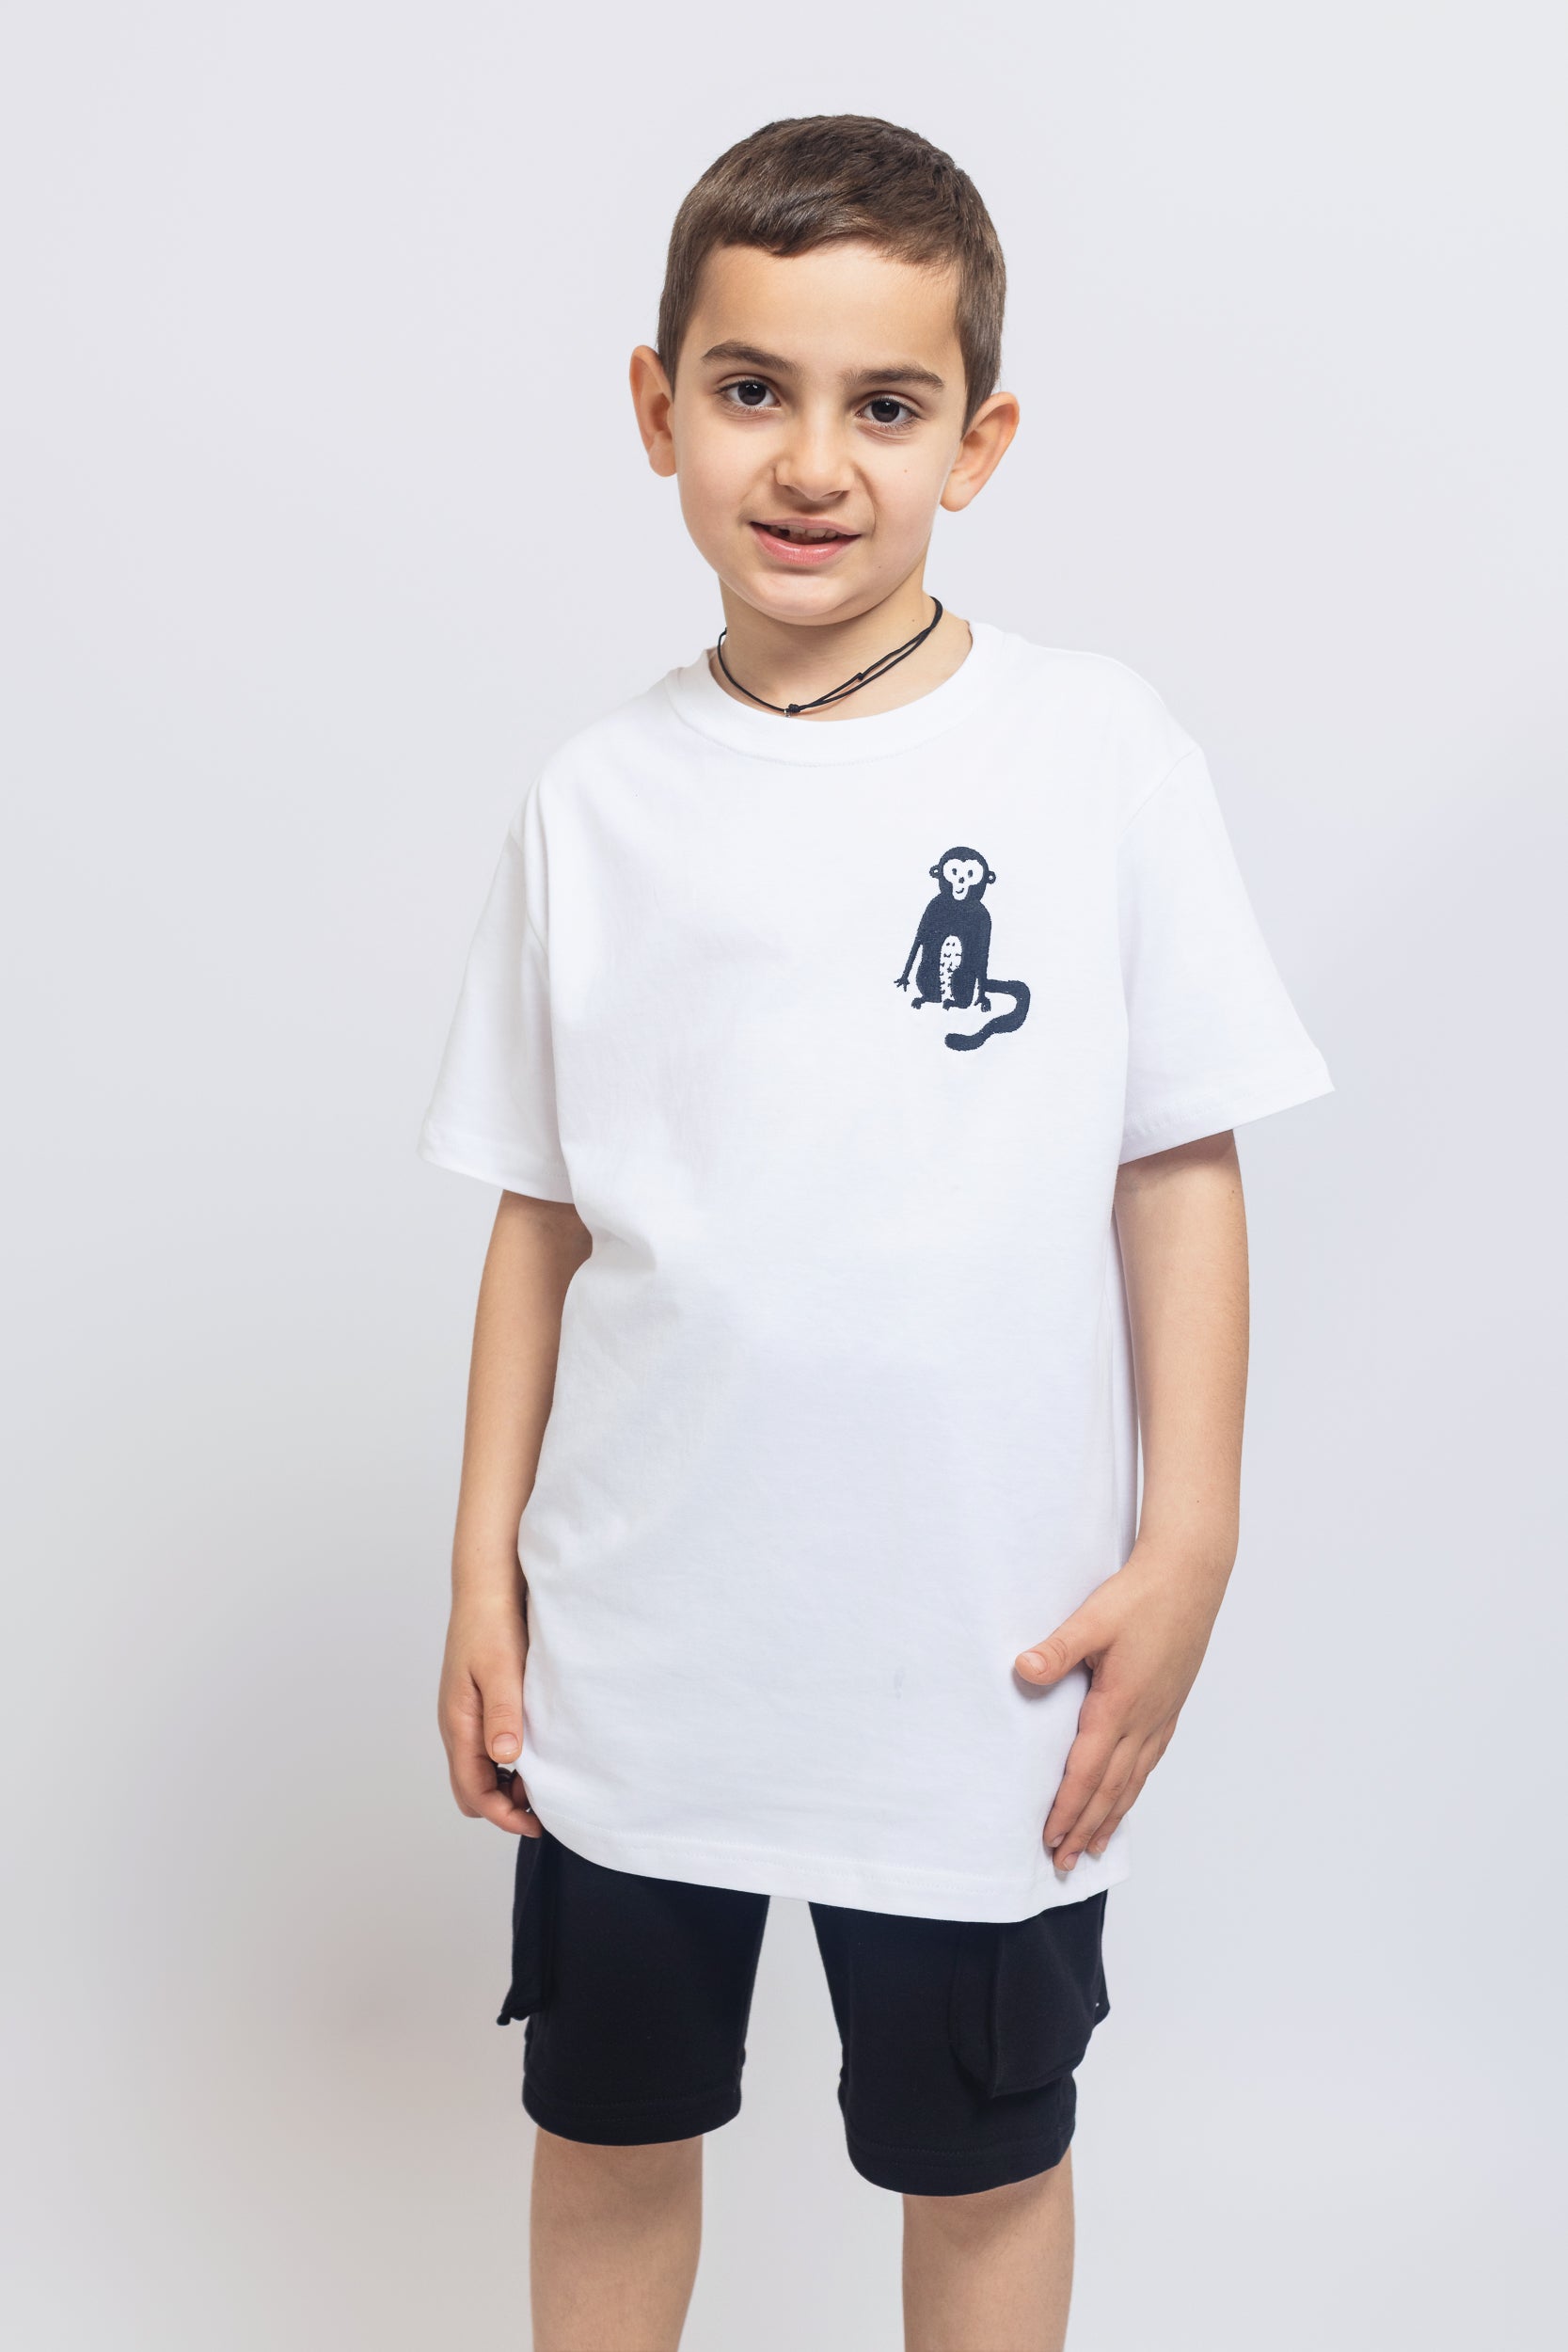 Monkey T-shirt For Boys - White